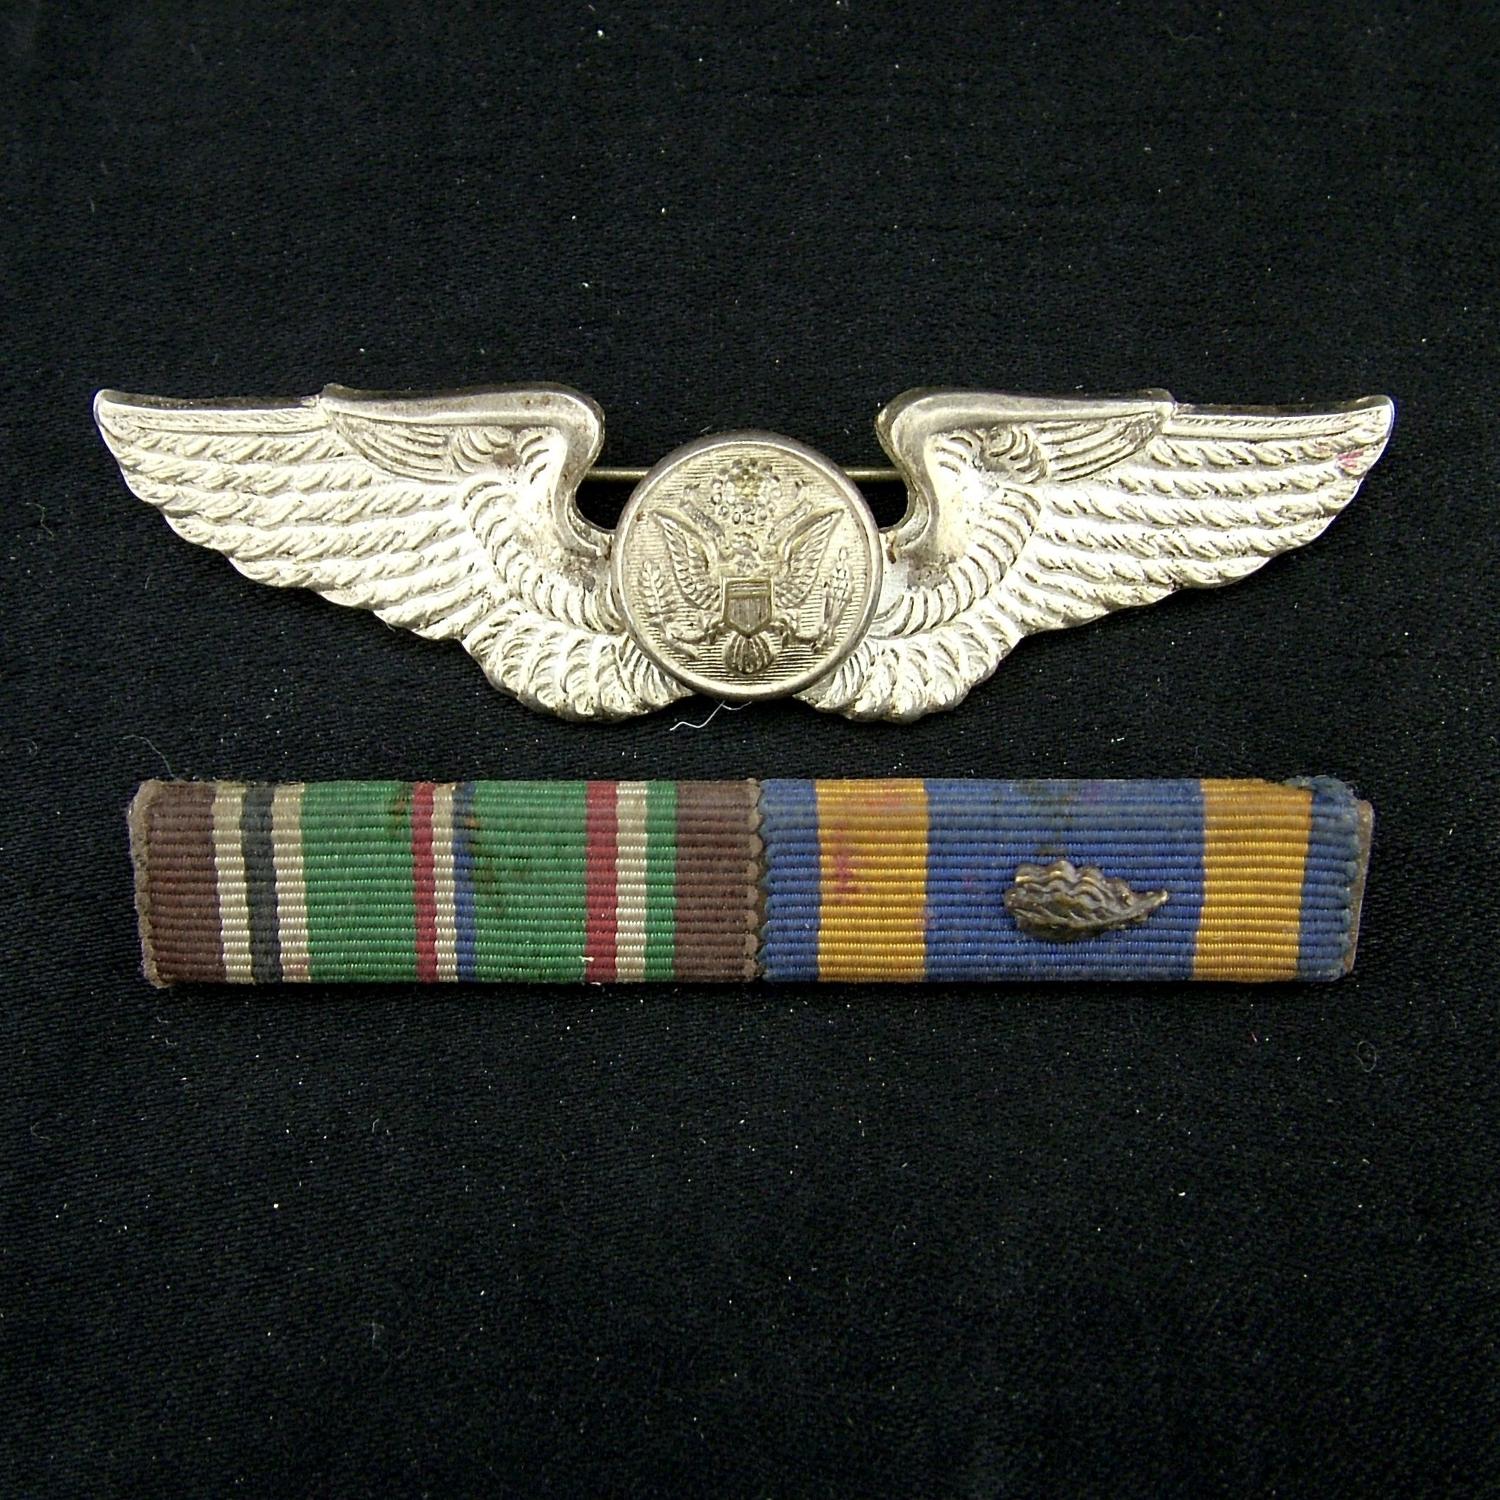 USAAF aircrew wing - English made